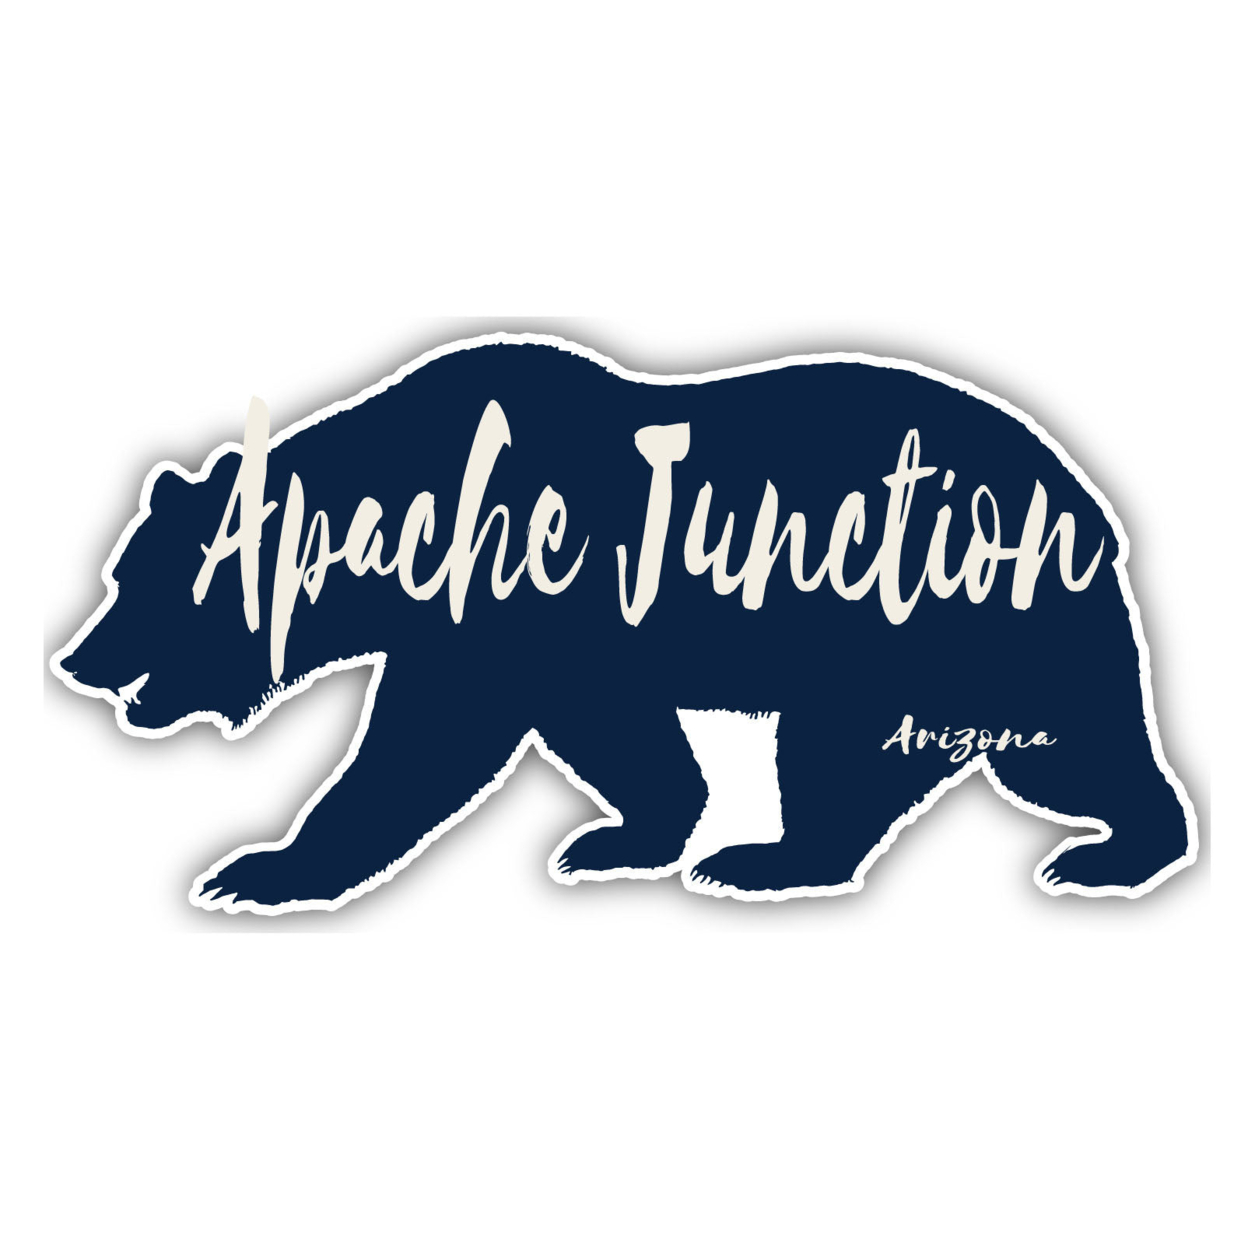 Apache Junction Arizona Souvenir Decorative Stickers (Choose Theme And Size) - 4-Pack, 8-Inch, Bear